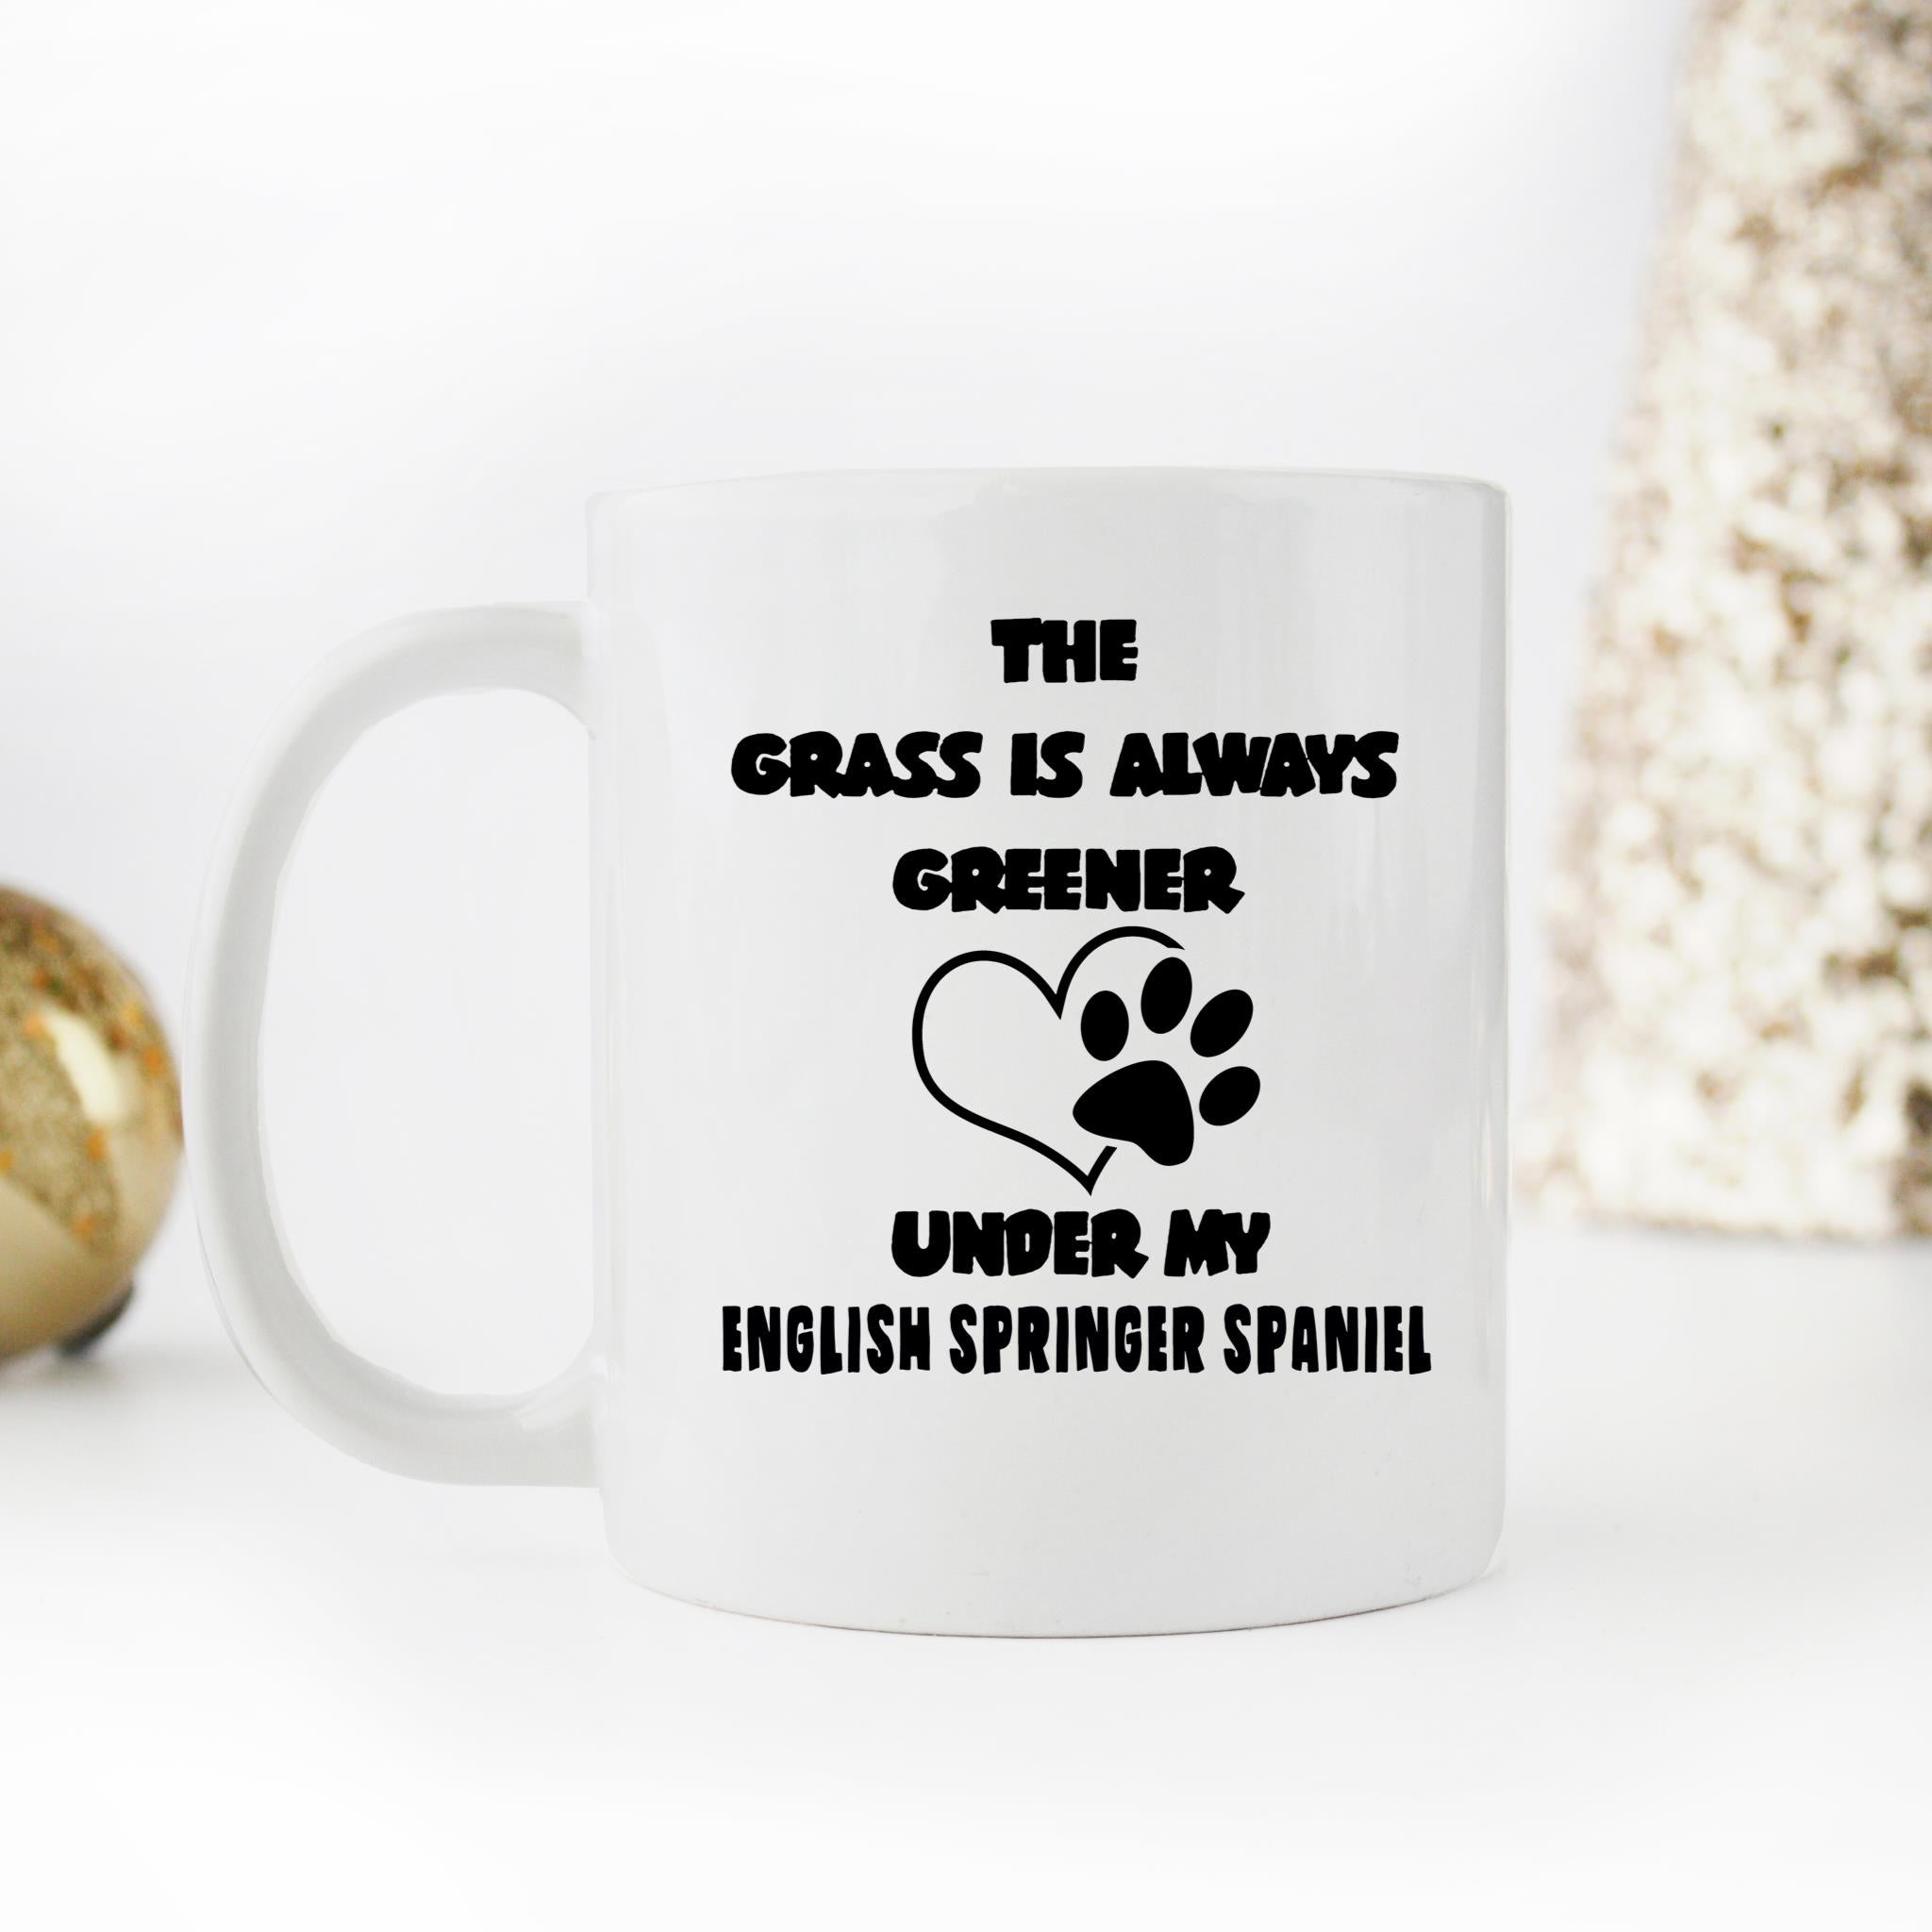 Skitons Funny Ceramic Novelty Coffee Mug The Grass Is Always Greener Under My English Springer Spaniel Dog Funny Sarcastic, Dog Lover ALKEYDm